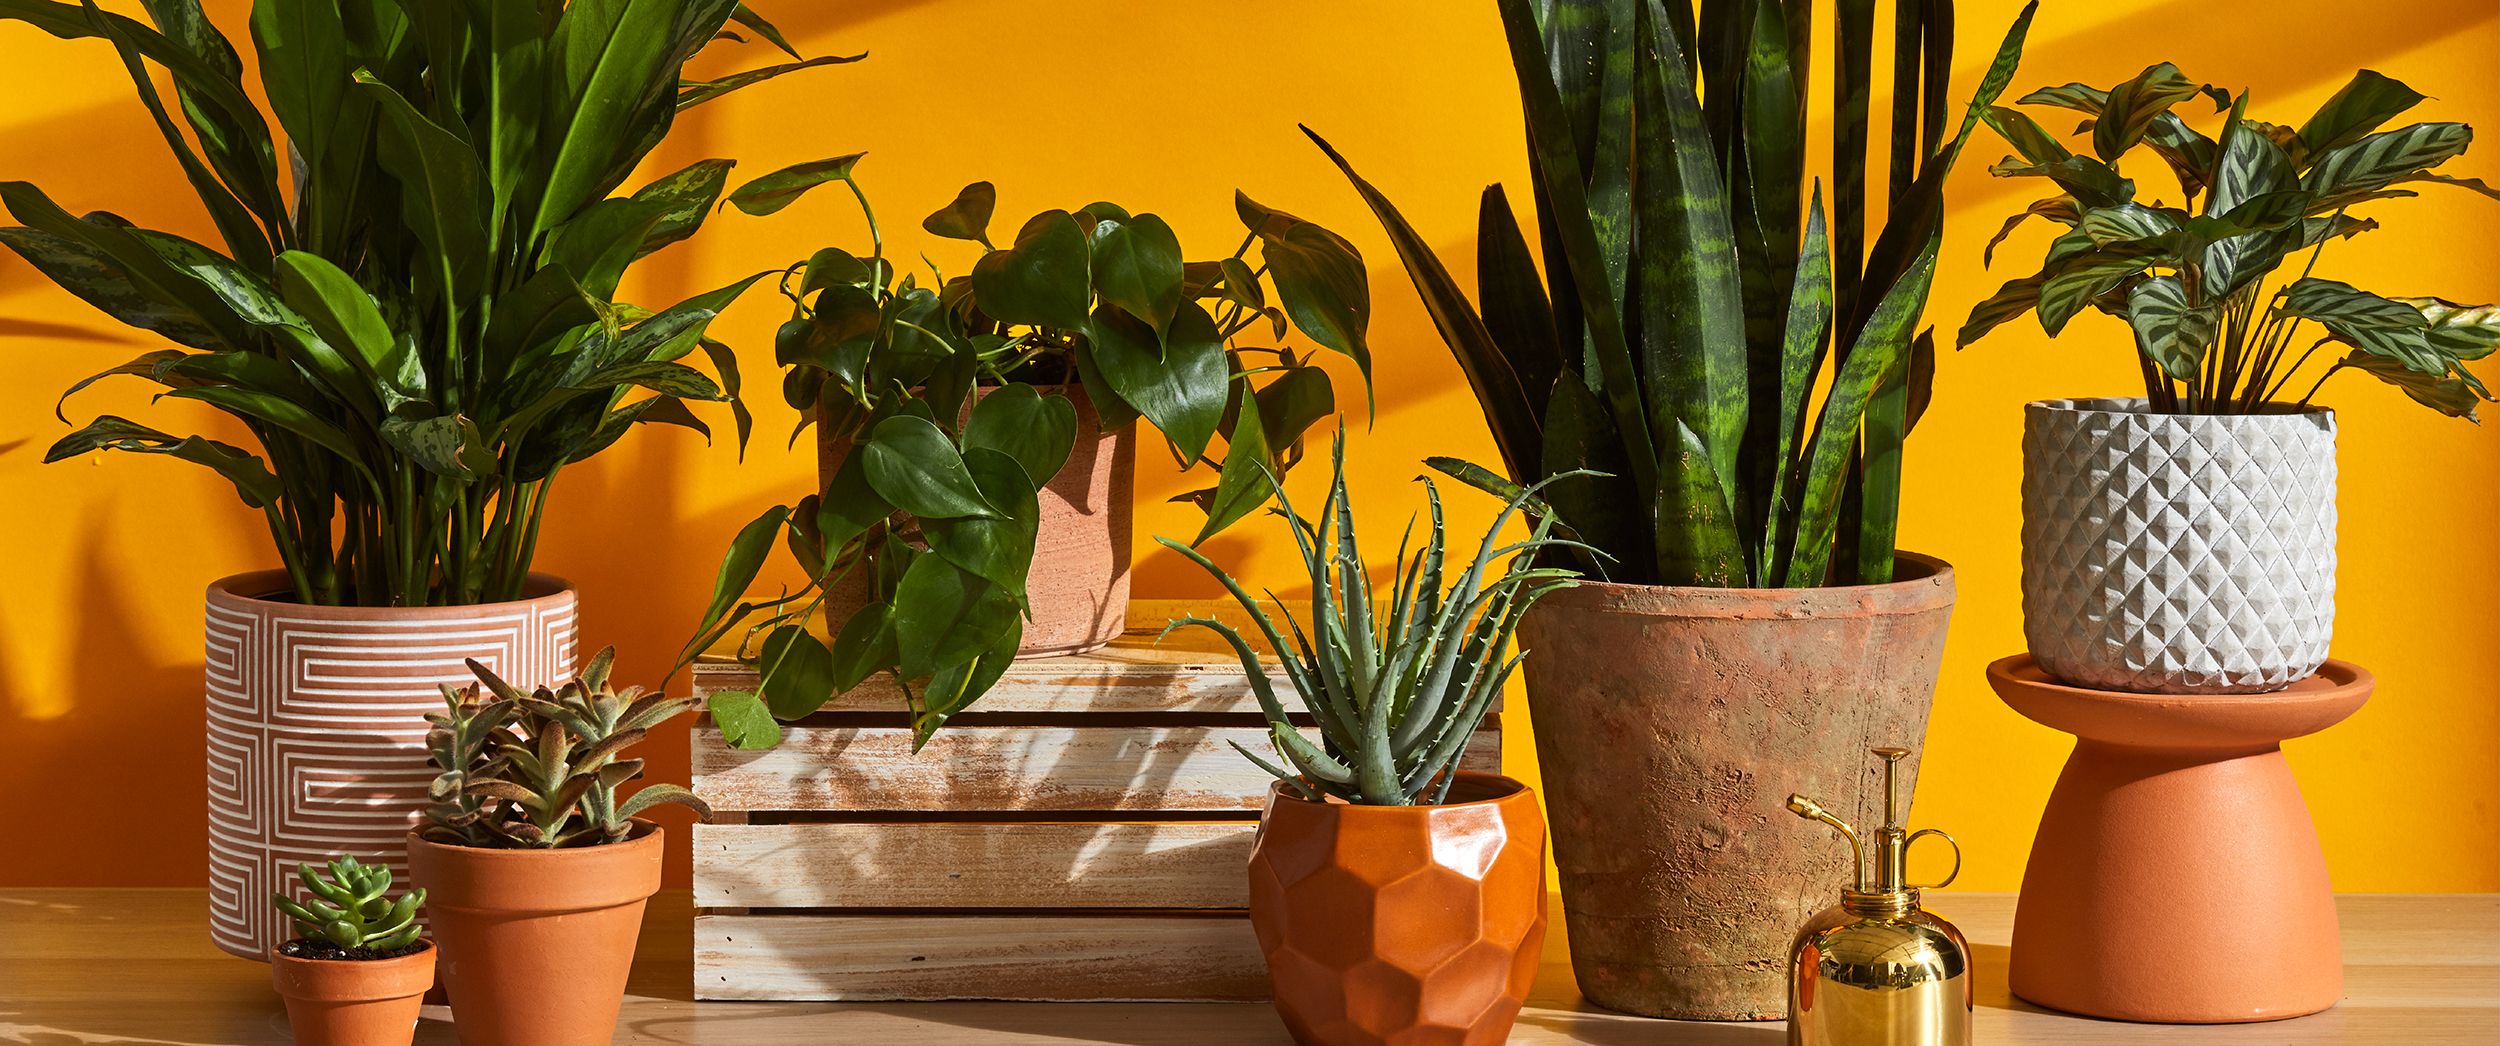 green plants in terracotta pots against an orange background